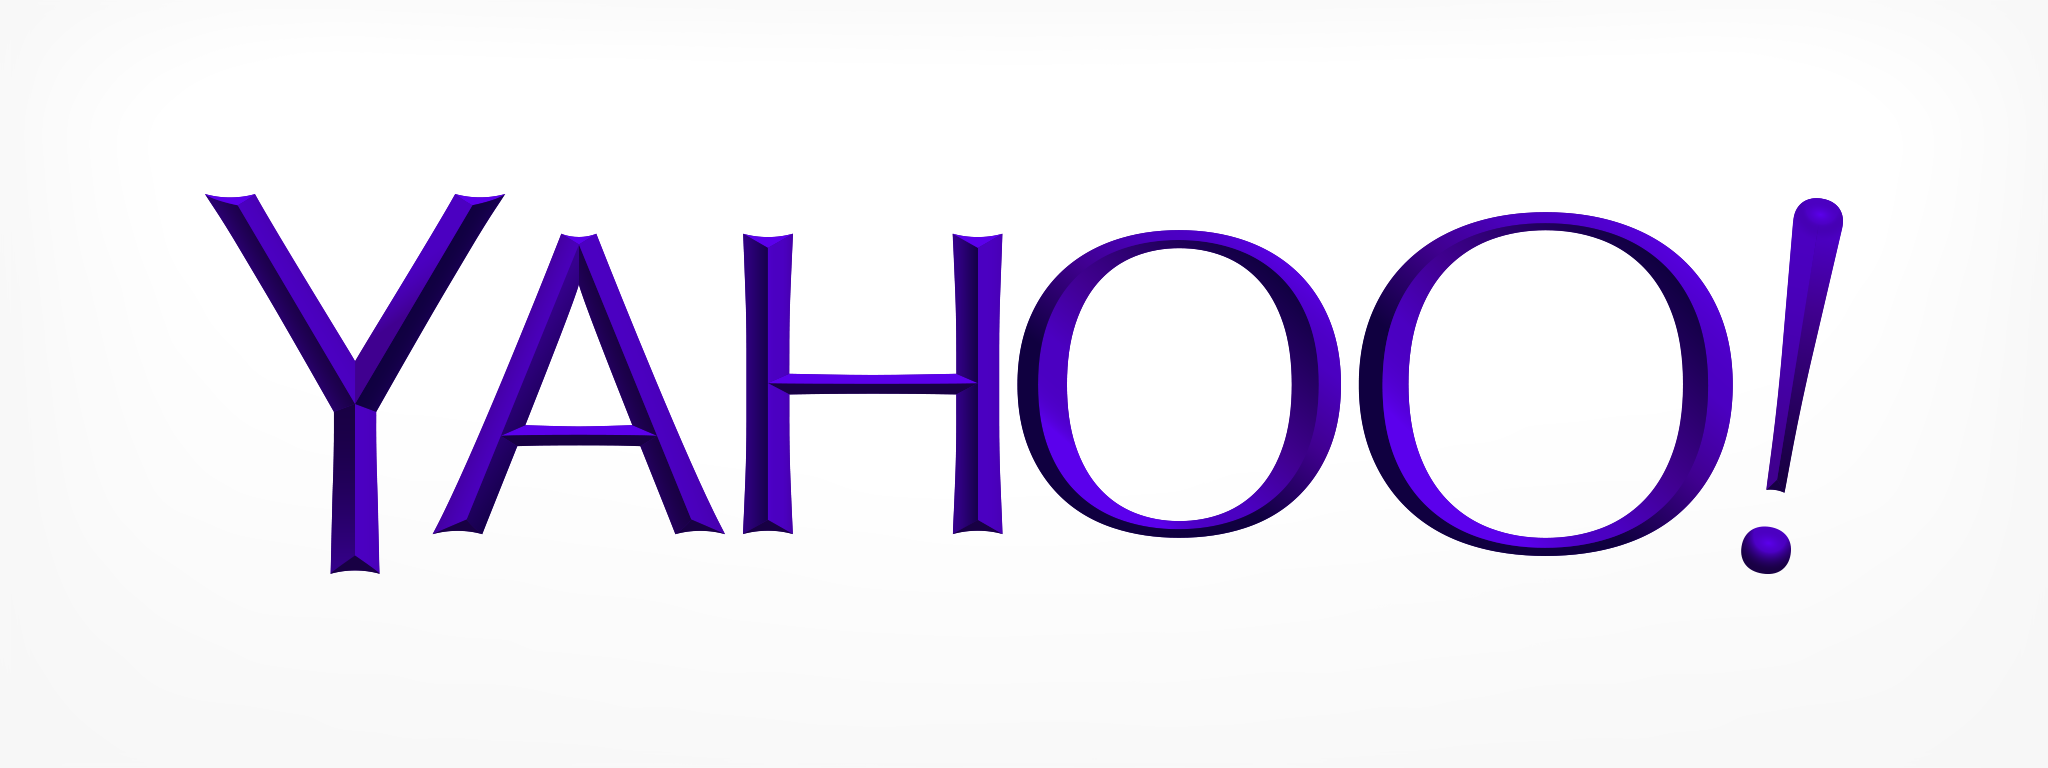 ... Yahoo Protocol Clip Art -